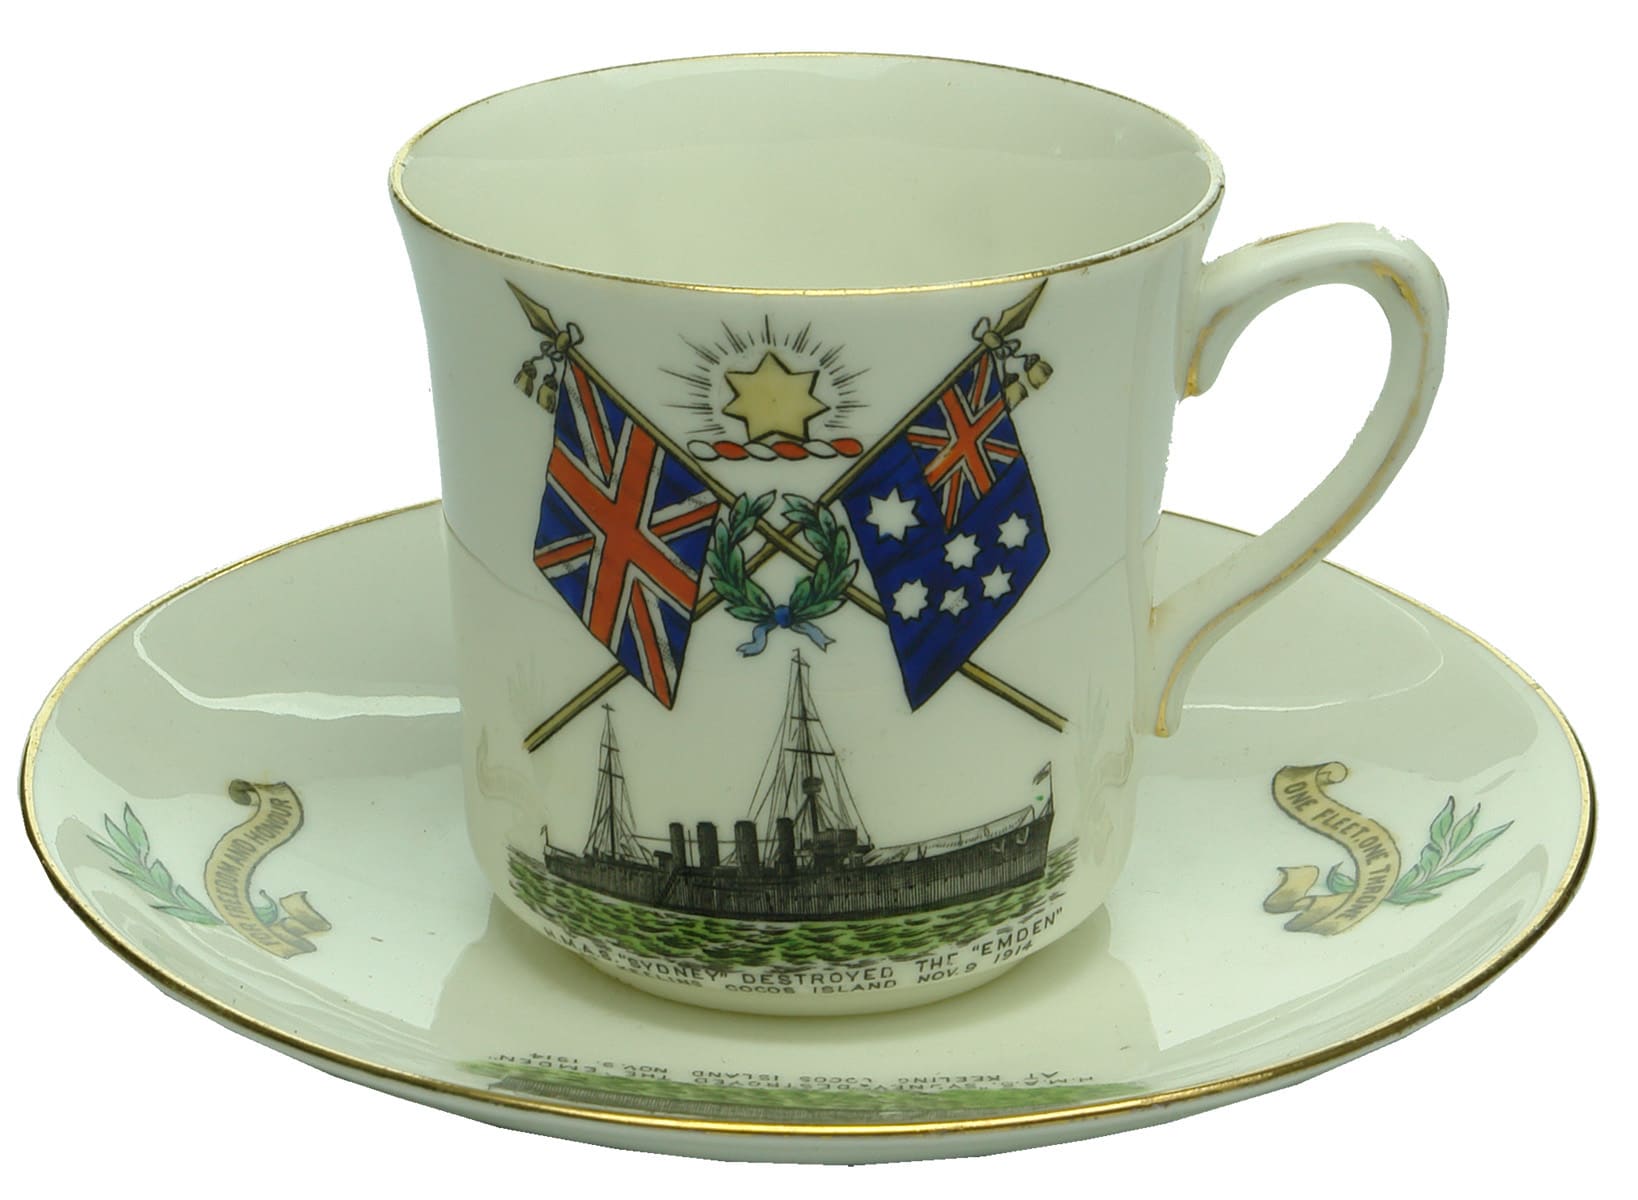 HMAS Sydney Emden Commemorative Cup Saucer Plate